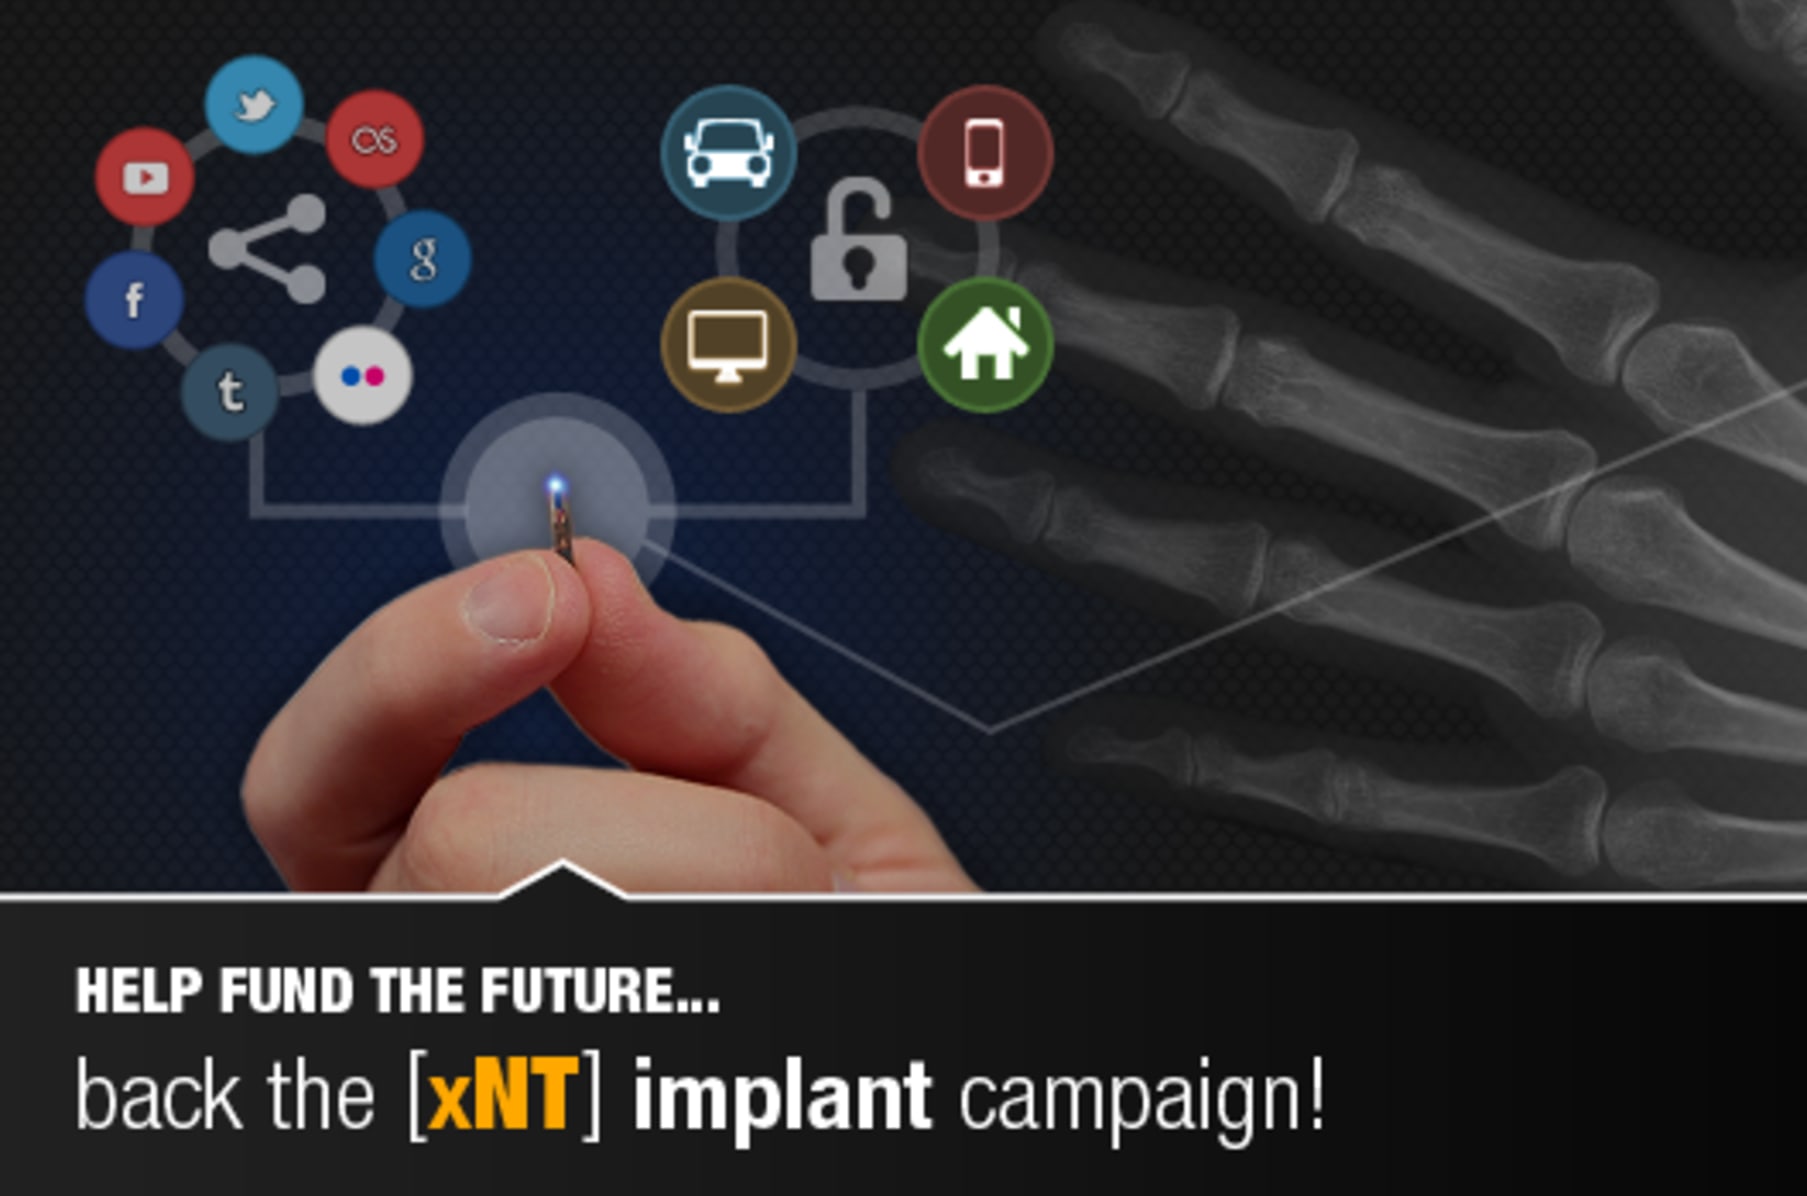 The xNT implantable NFC chip